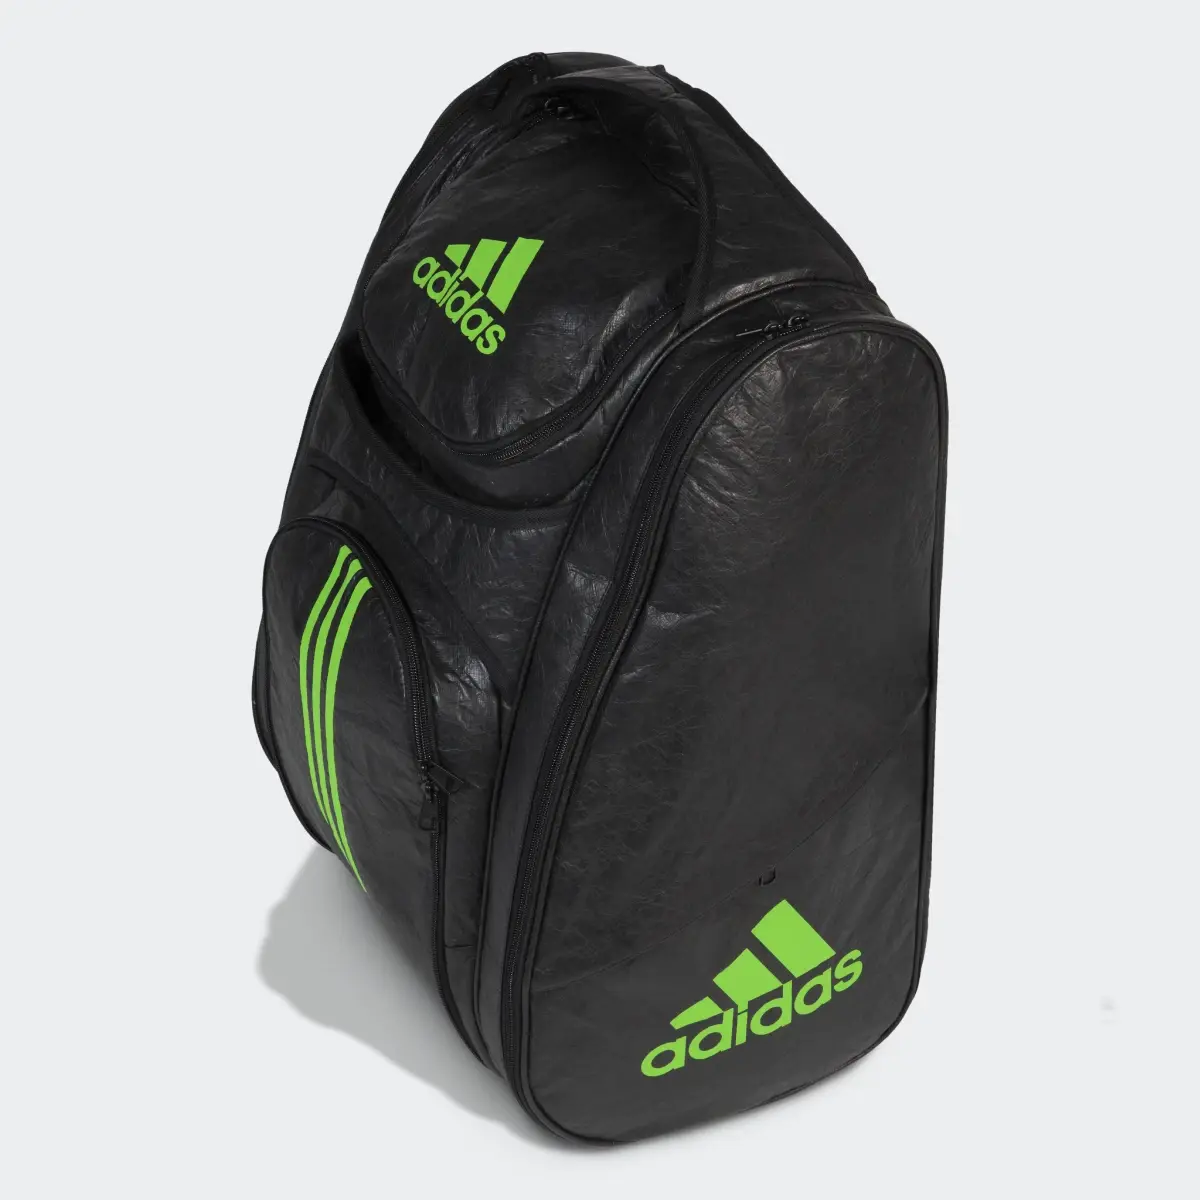 Adidas Multigame Racquet Bag. 2